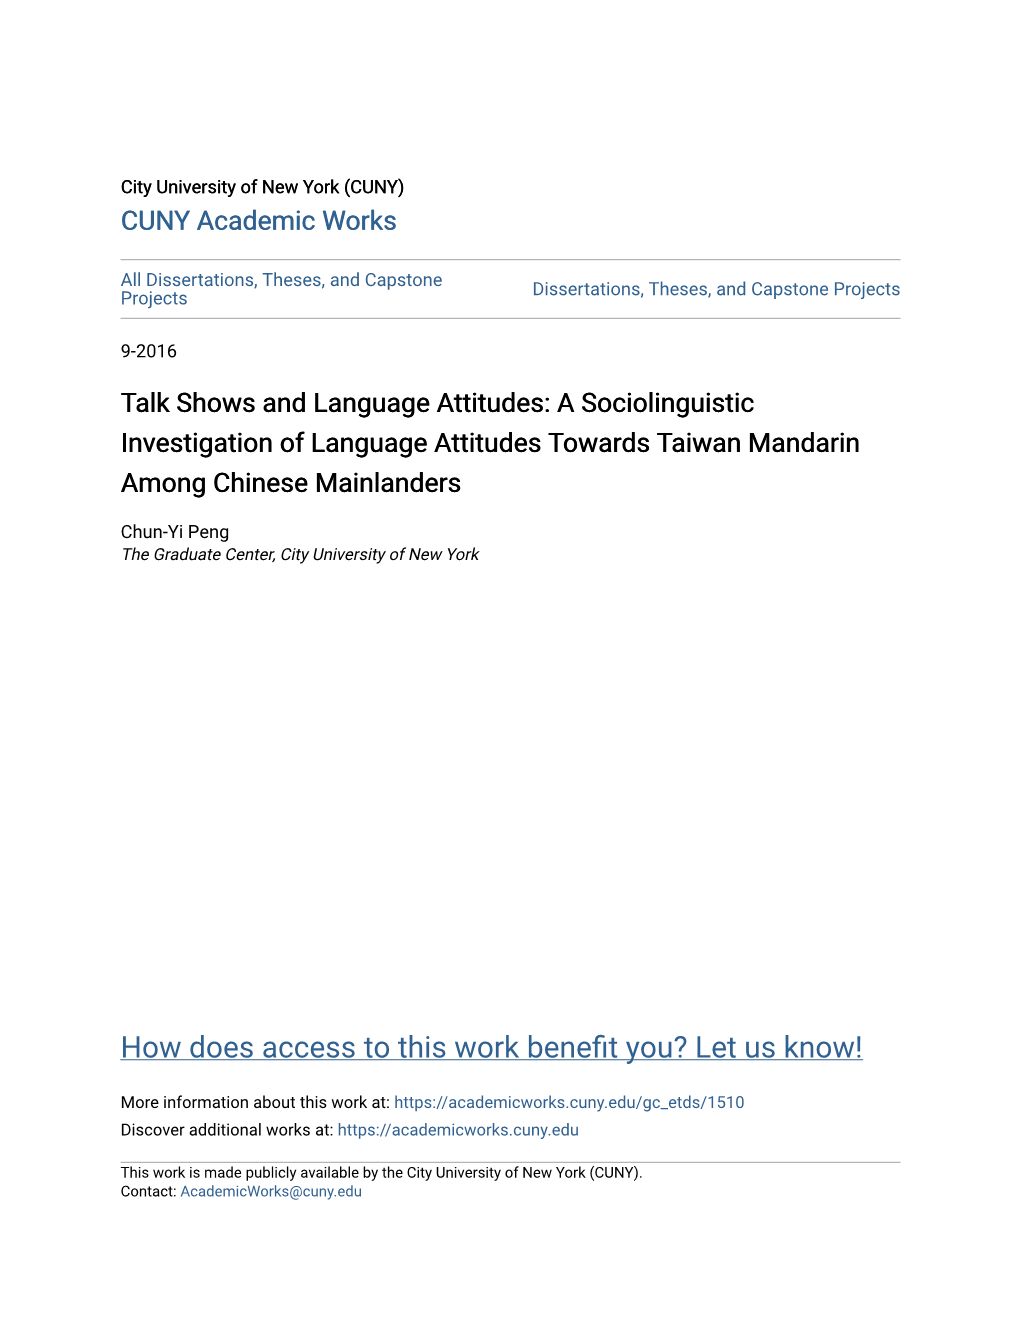 Talk Shows and Language Attitudes: a Sociolinguistic Investigation of Language Attitudes Towards Taiwan Mandarin Among Chinese Mainlanders